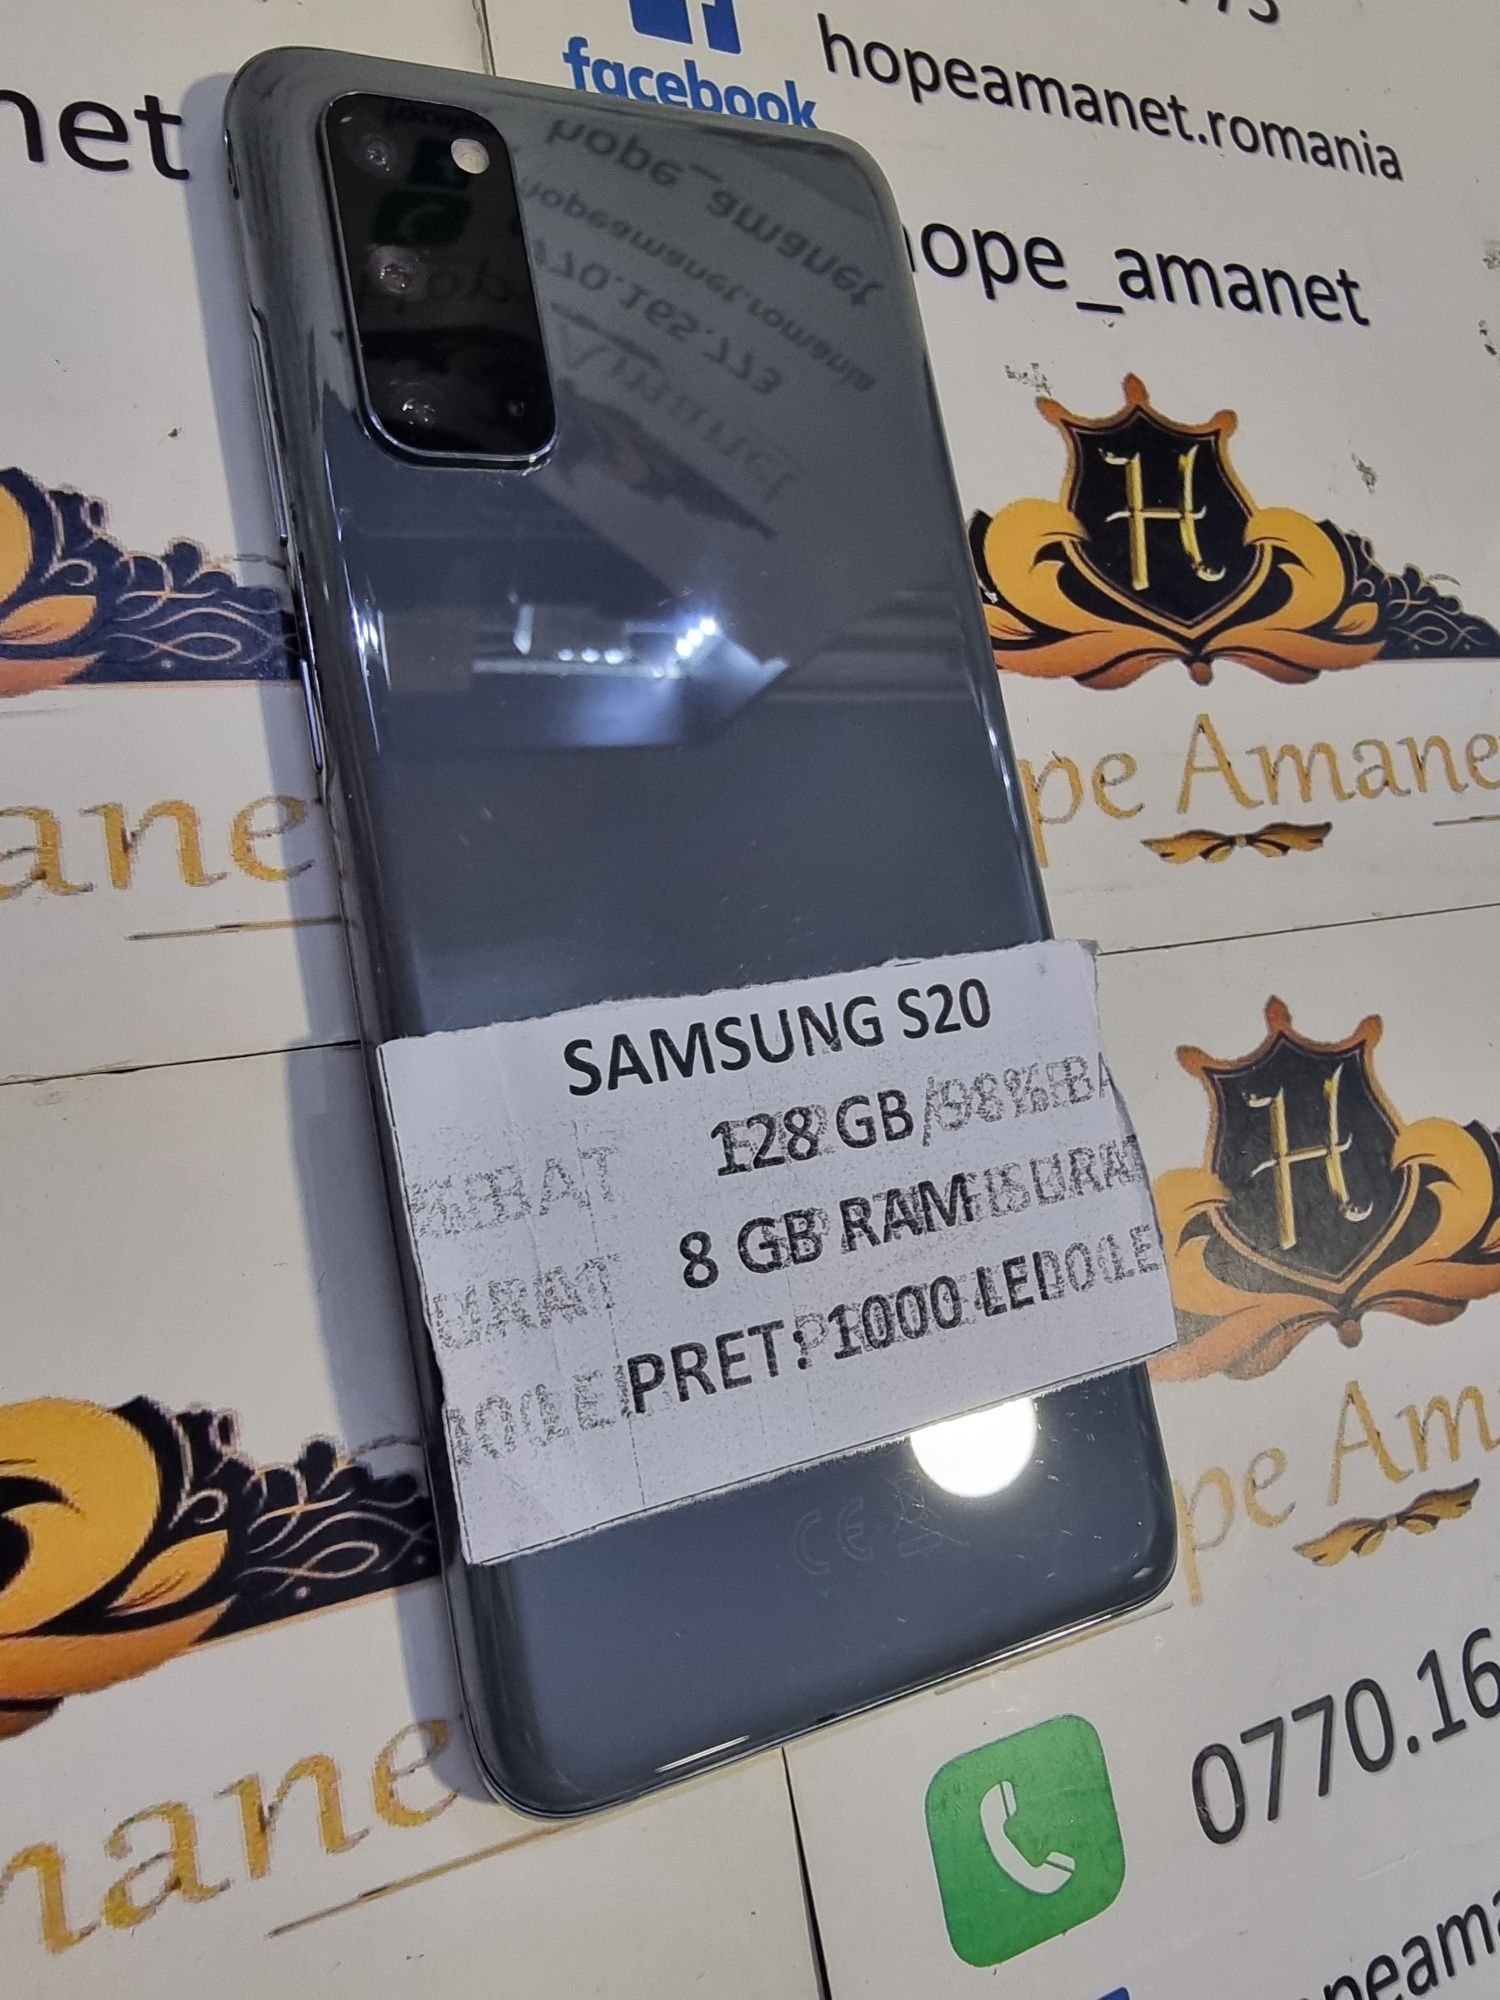 Hope Amanet P6 Samsung S20